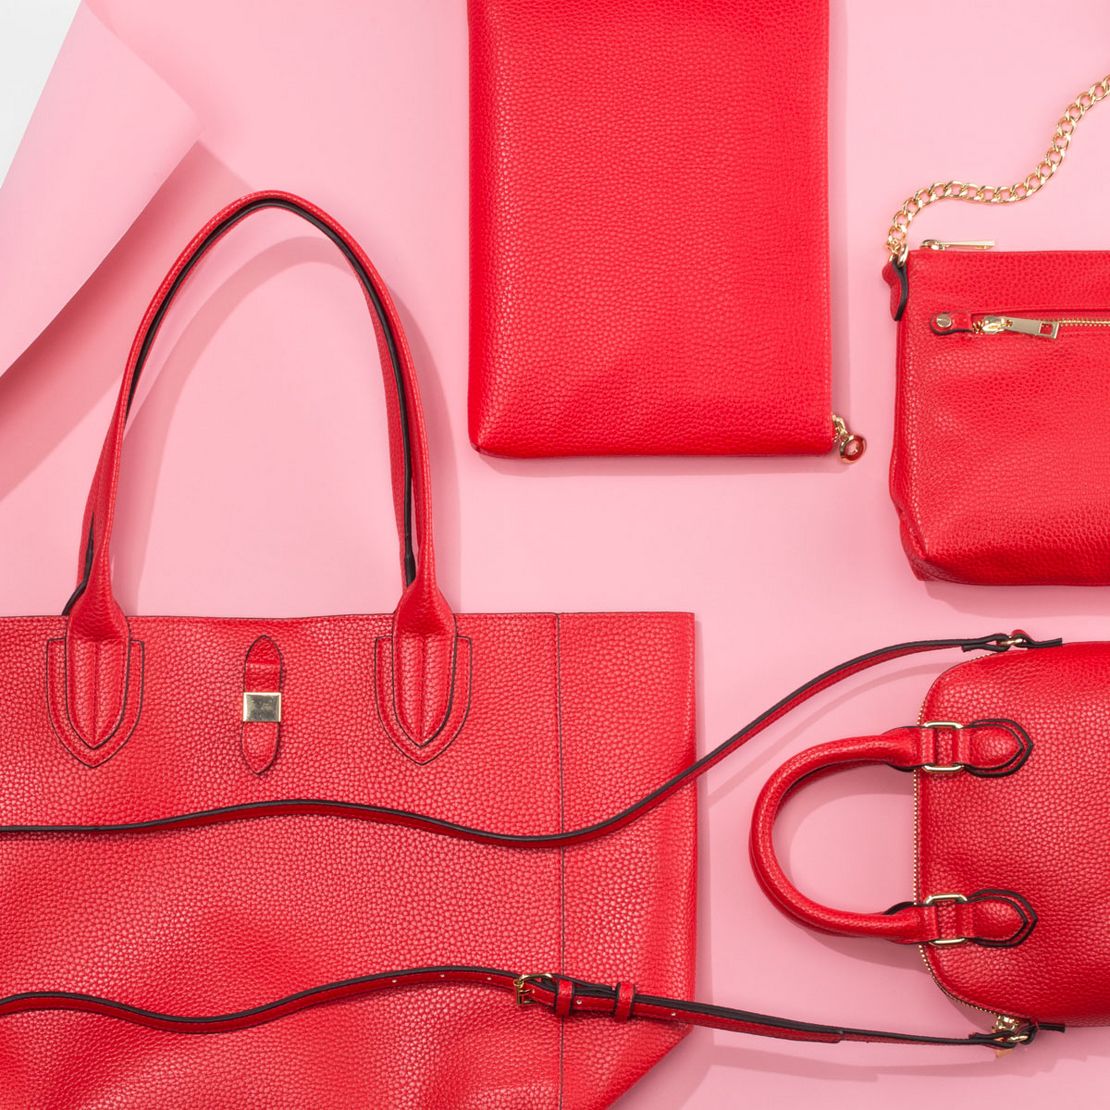 Backpack Handbags : Handbags : Target